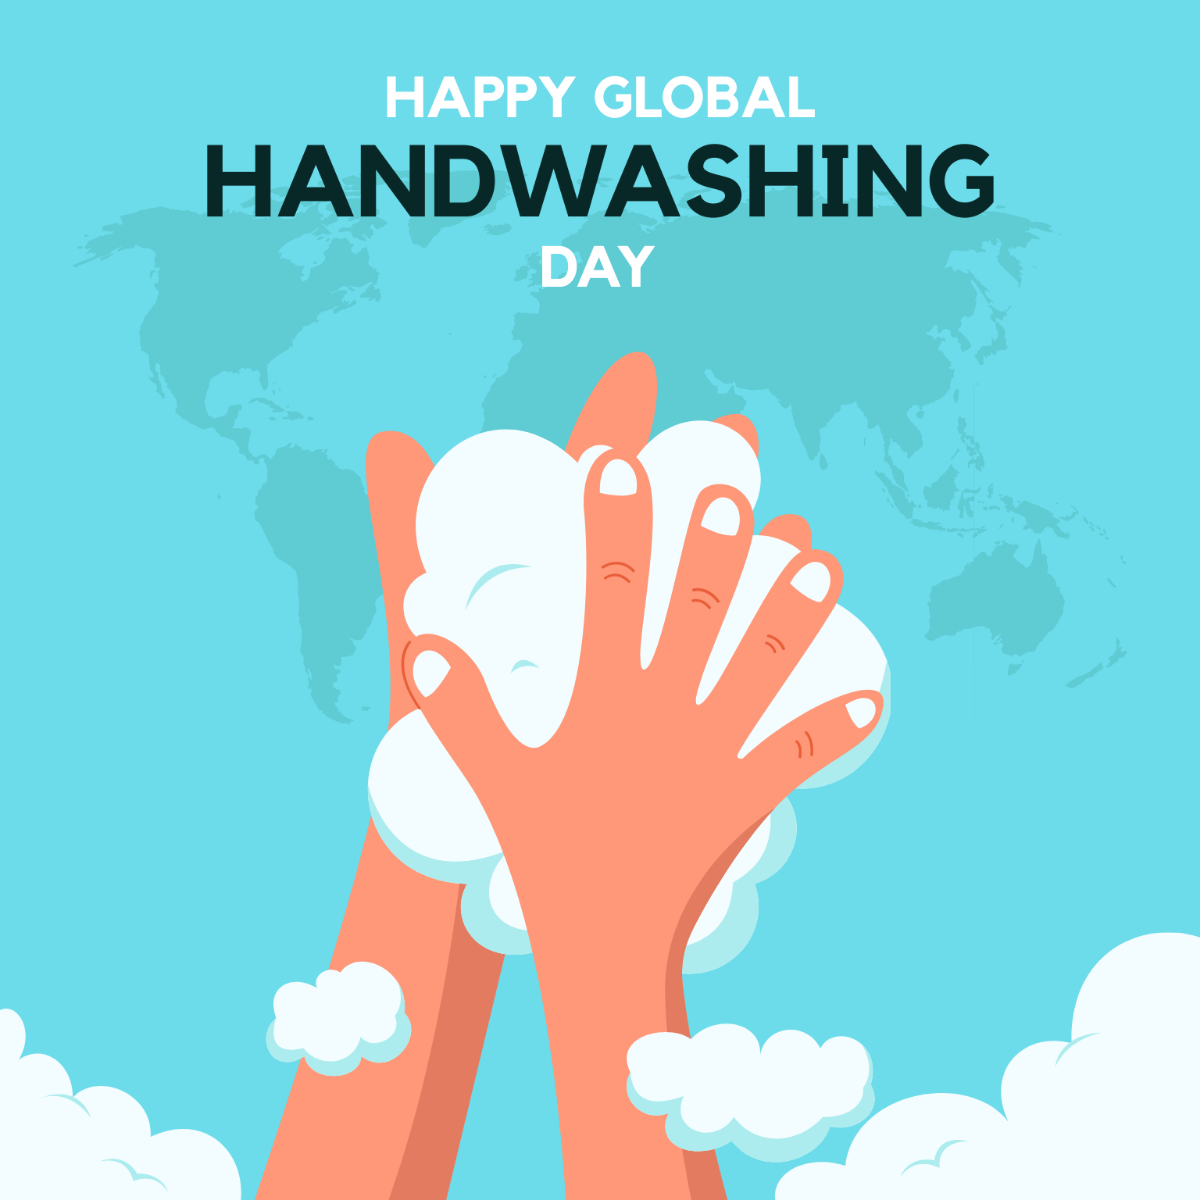 Happy Global Handwashing Day Illustration Template